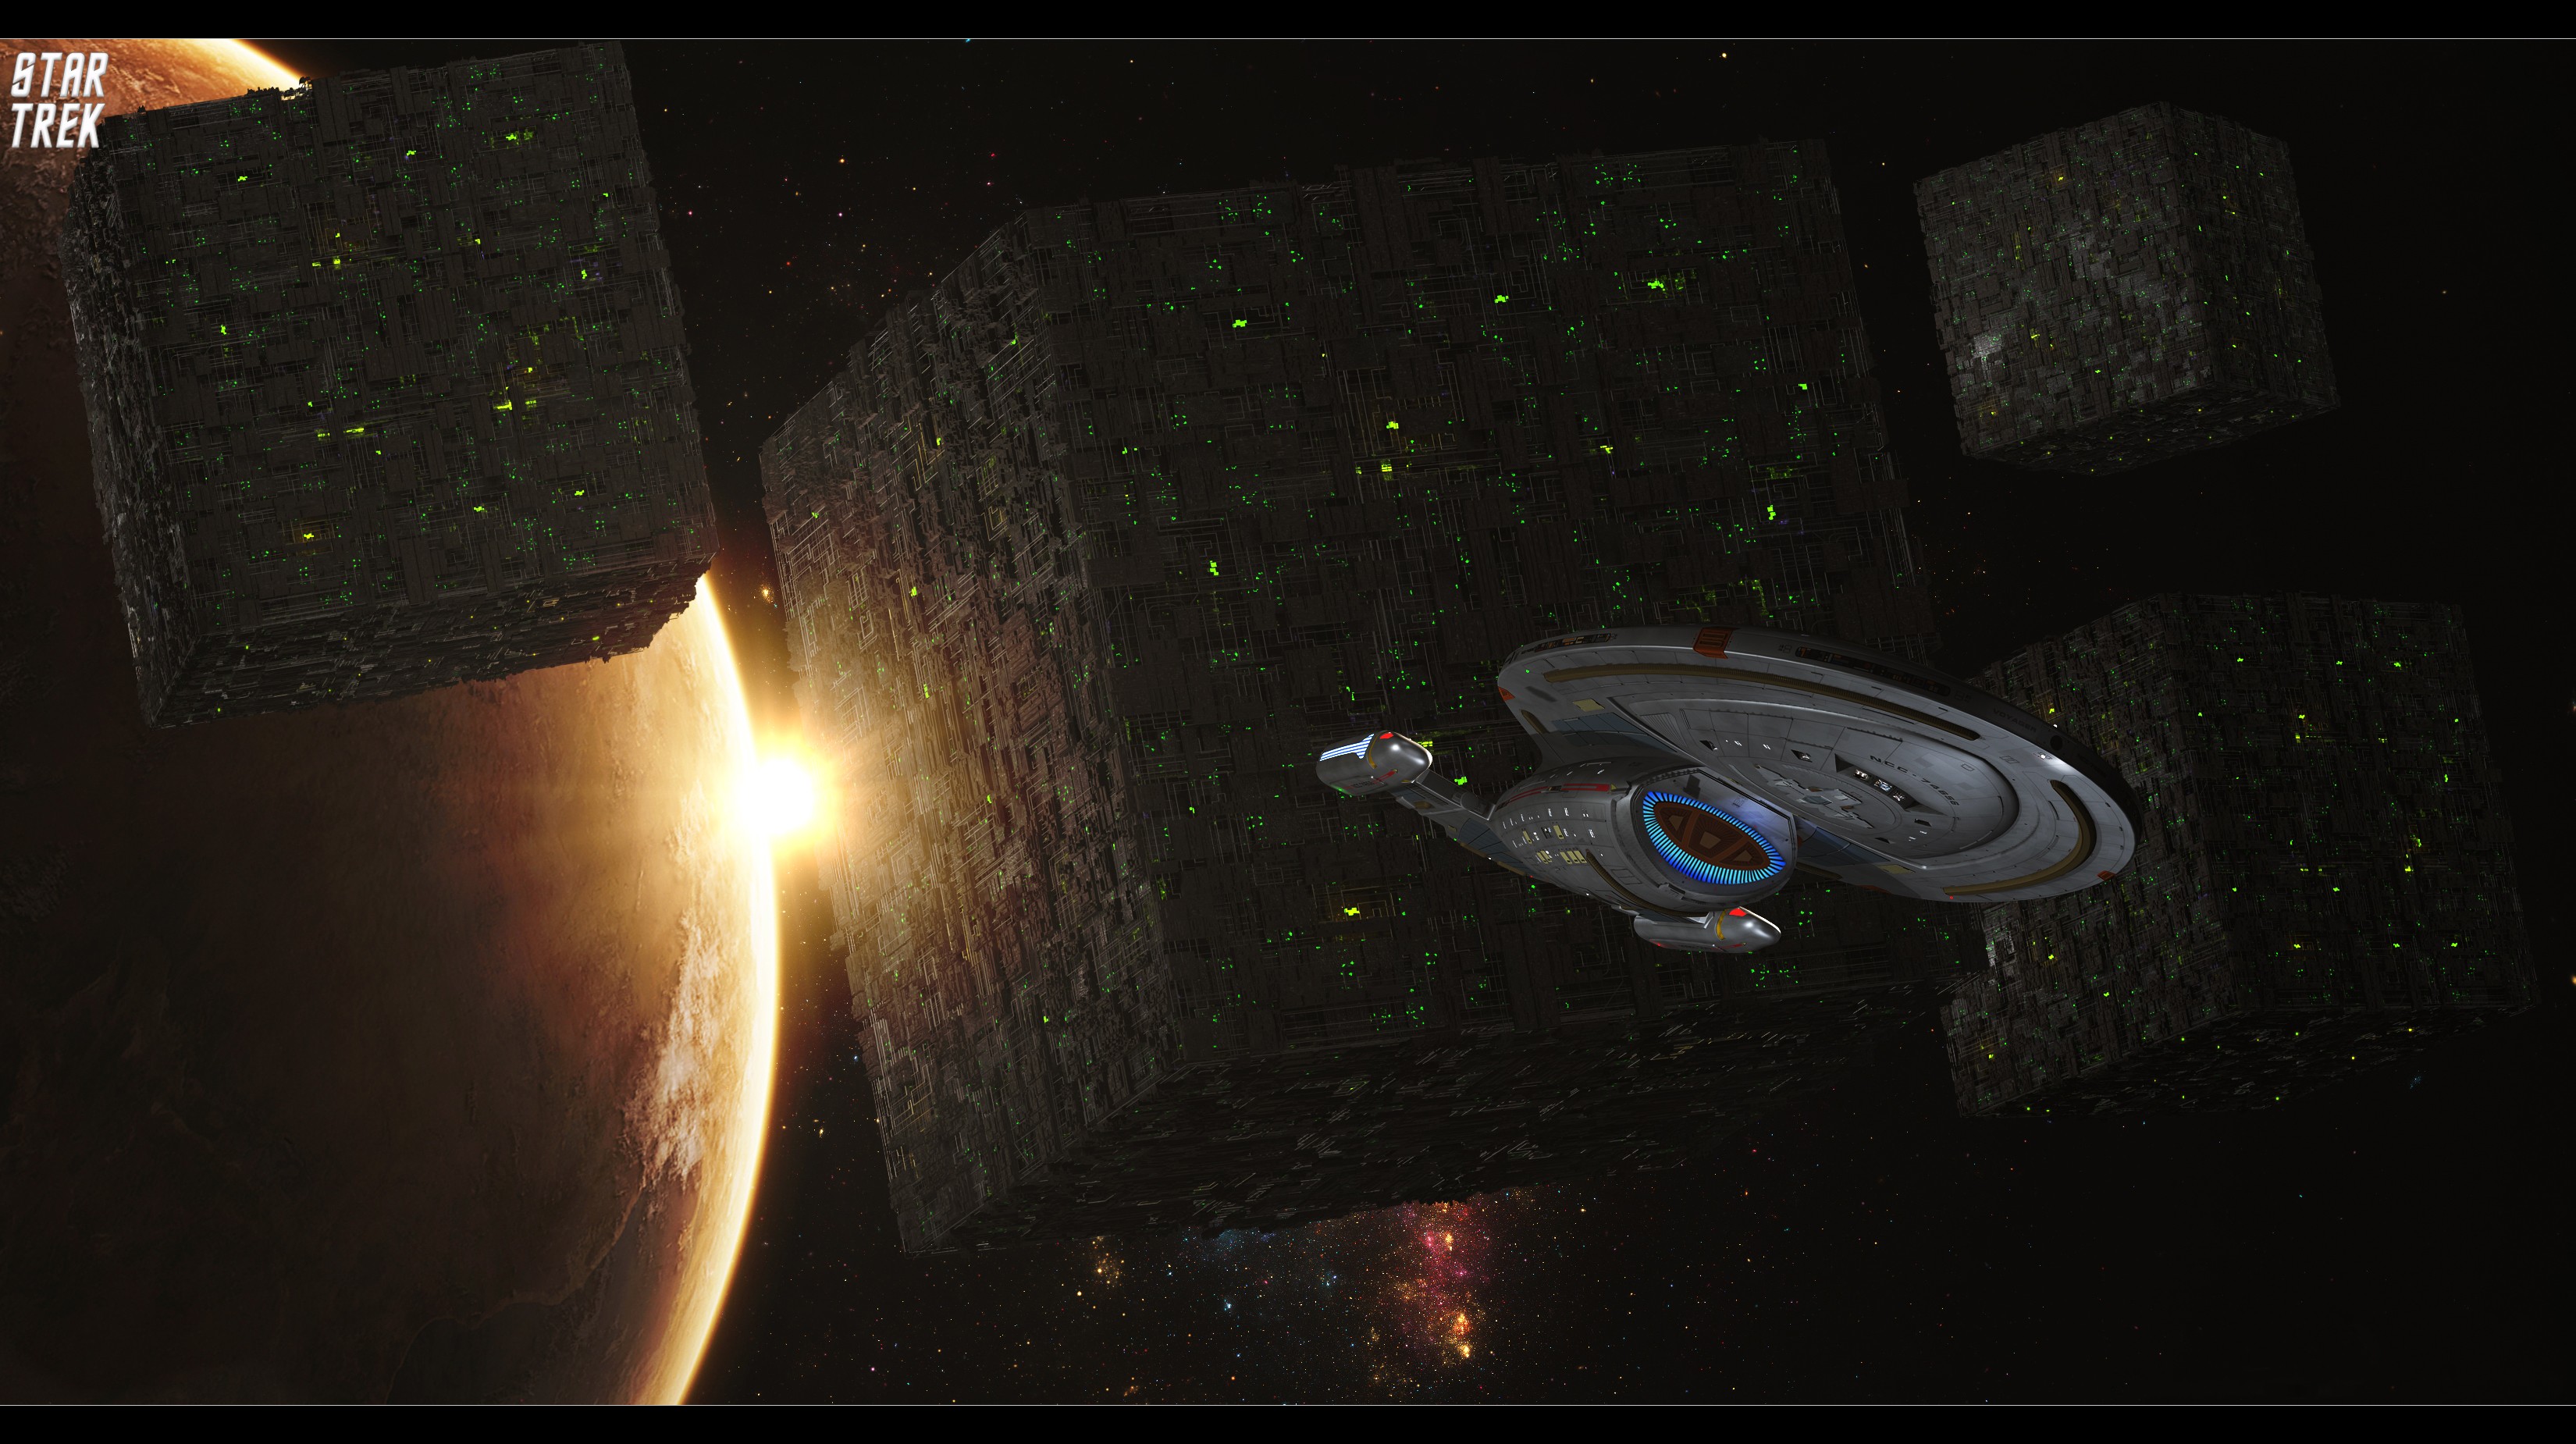 General 3300x1850 Star Trek USS Voyager Borg space science fiction TV series vehicle planet spaceship digital art